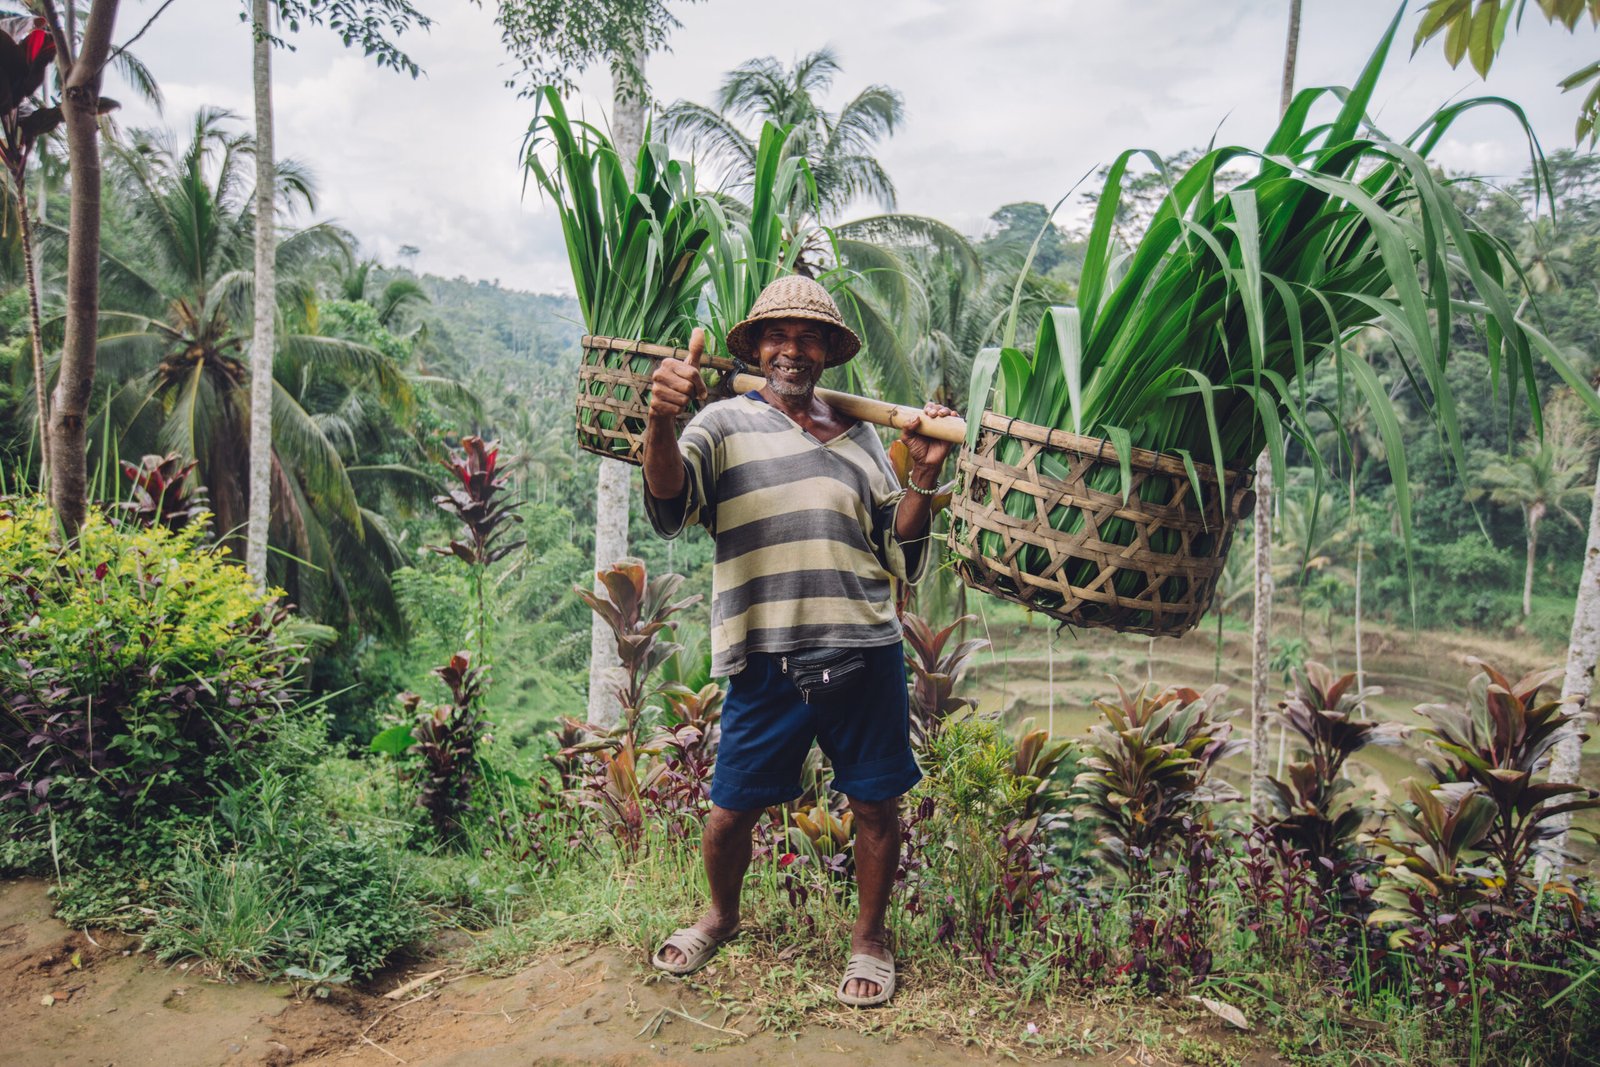 Farmer carrying a yoke on his shoulders in Bali